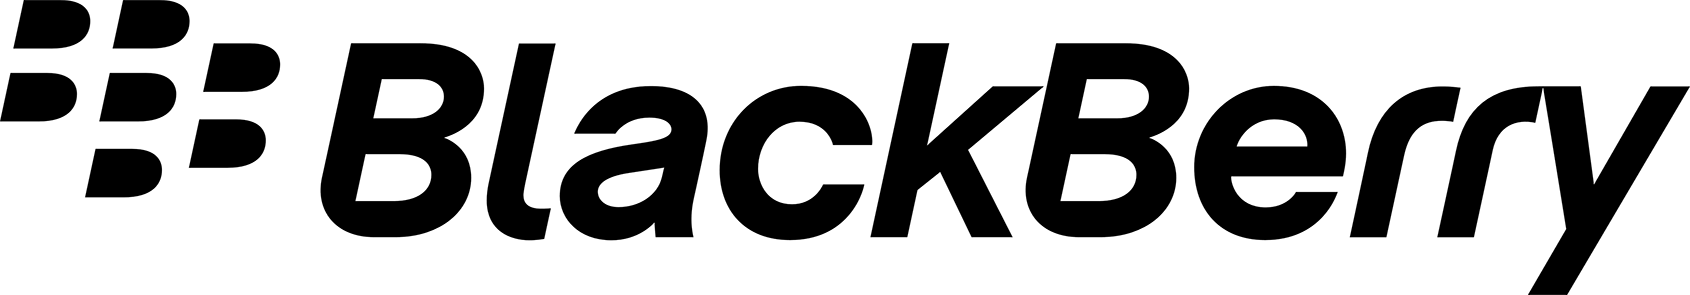 Blackberry_logo_PNG1-1.png